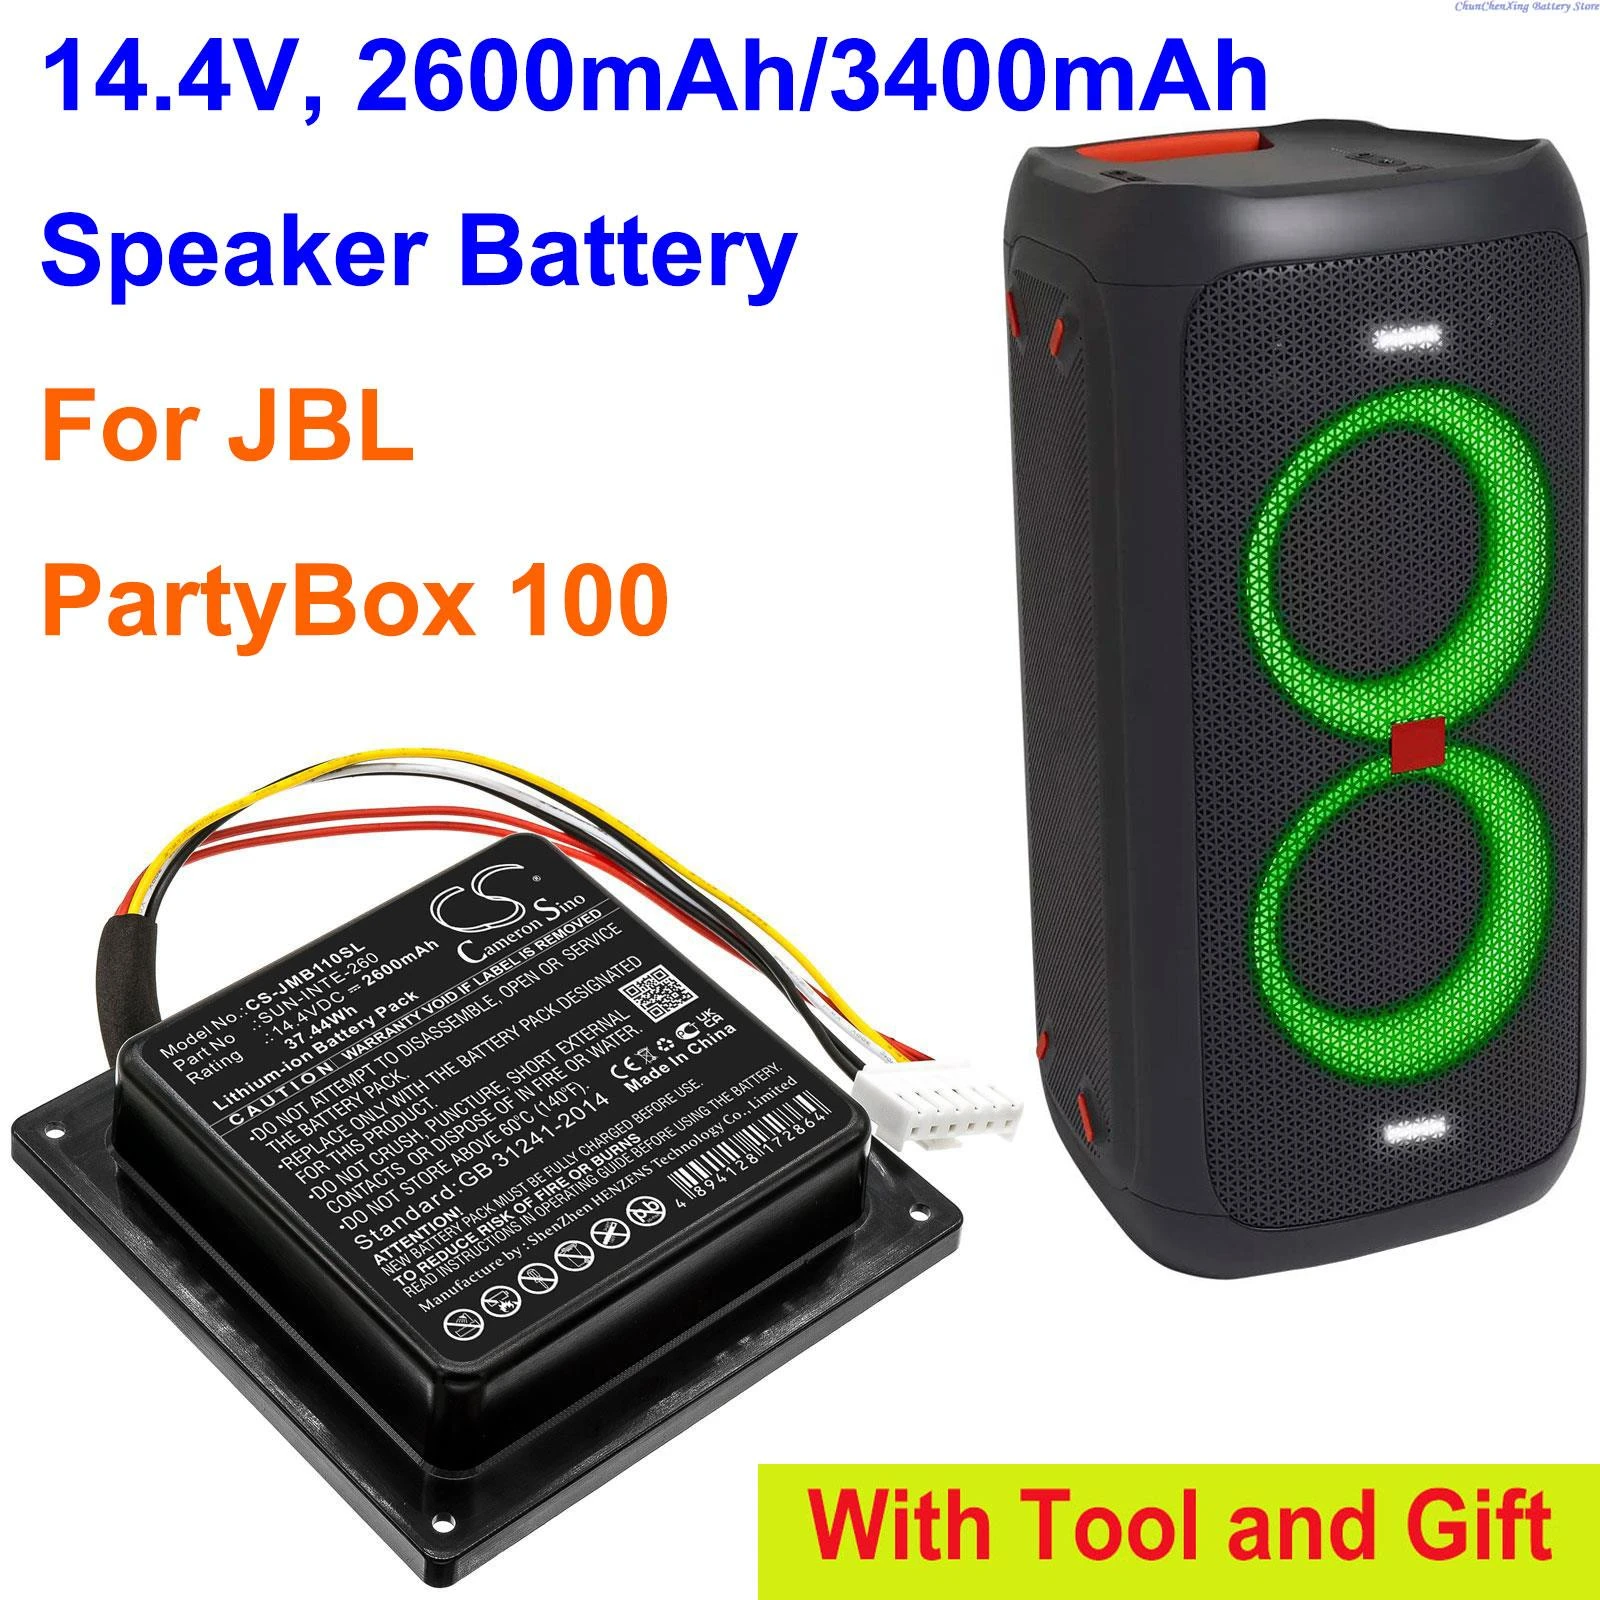 Jbl Partybox 100 Specifications | Jbl Partybox 100 Size - 2600mah/3400mah - Aliexpress